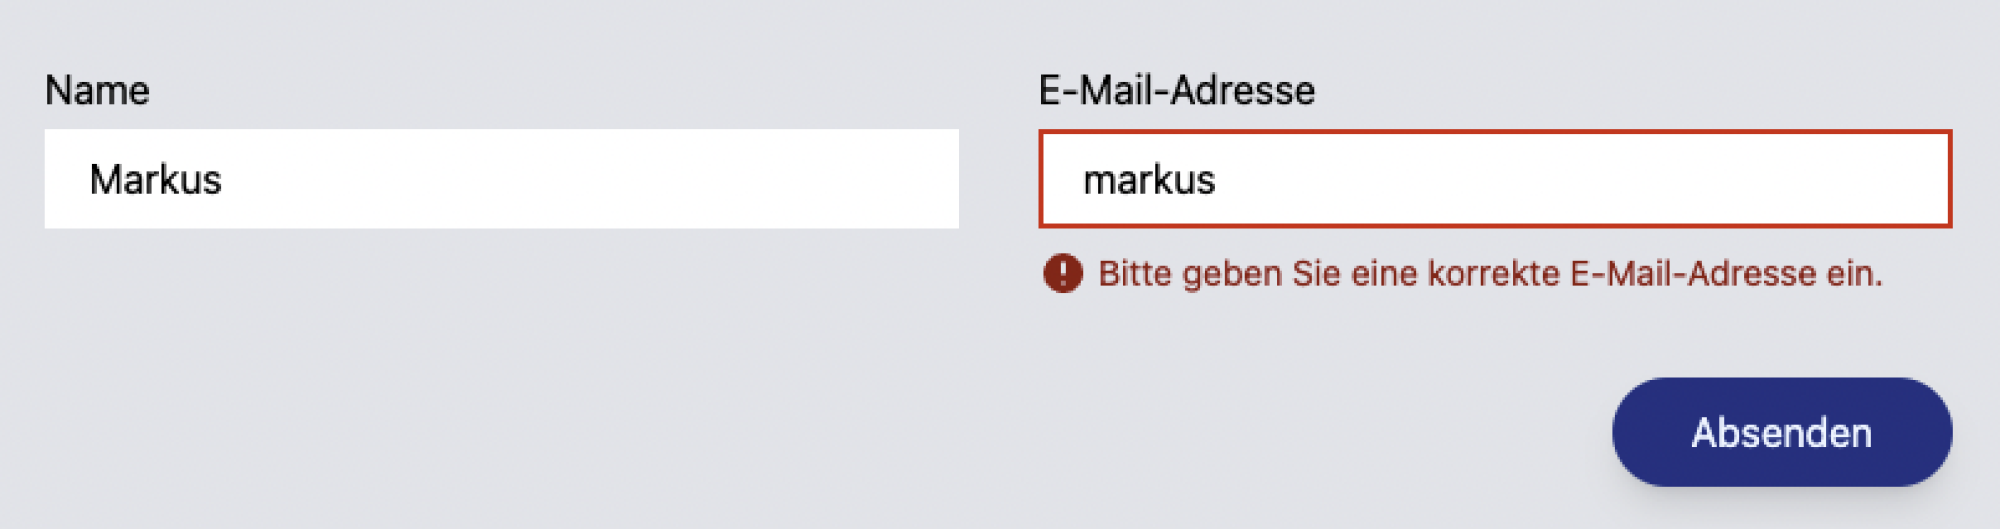 Screenshot eines fiktives Webformulars: Name und E-Mail-Adresse. Unter dem E-Mail-Adresse-Feld der Hinweis 